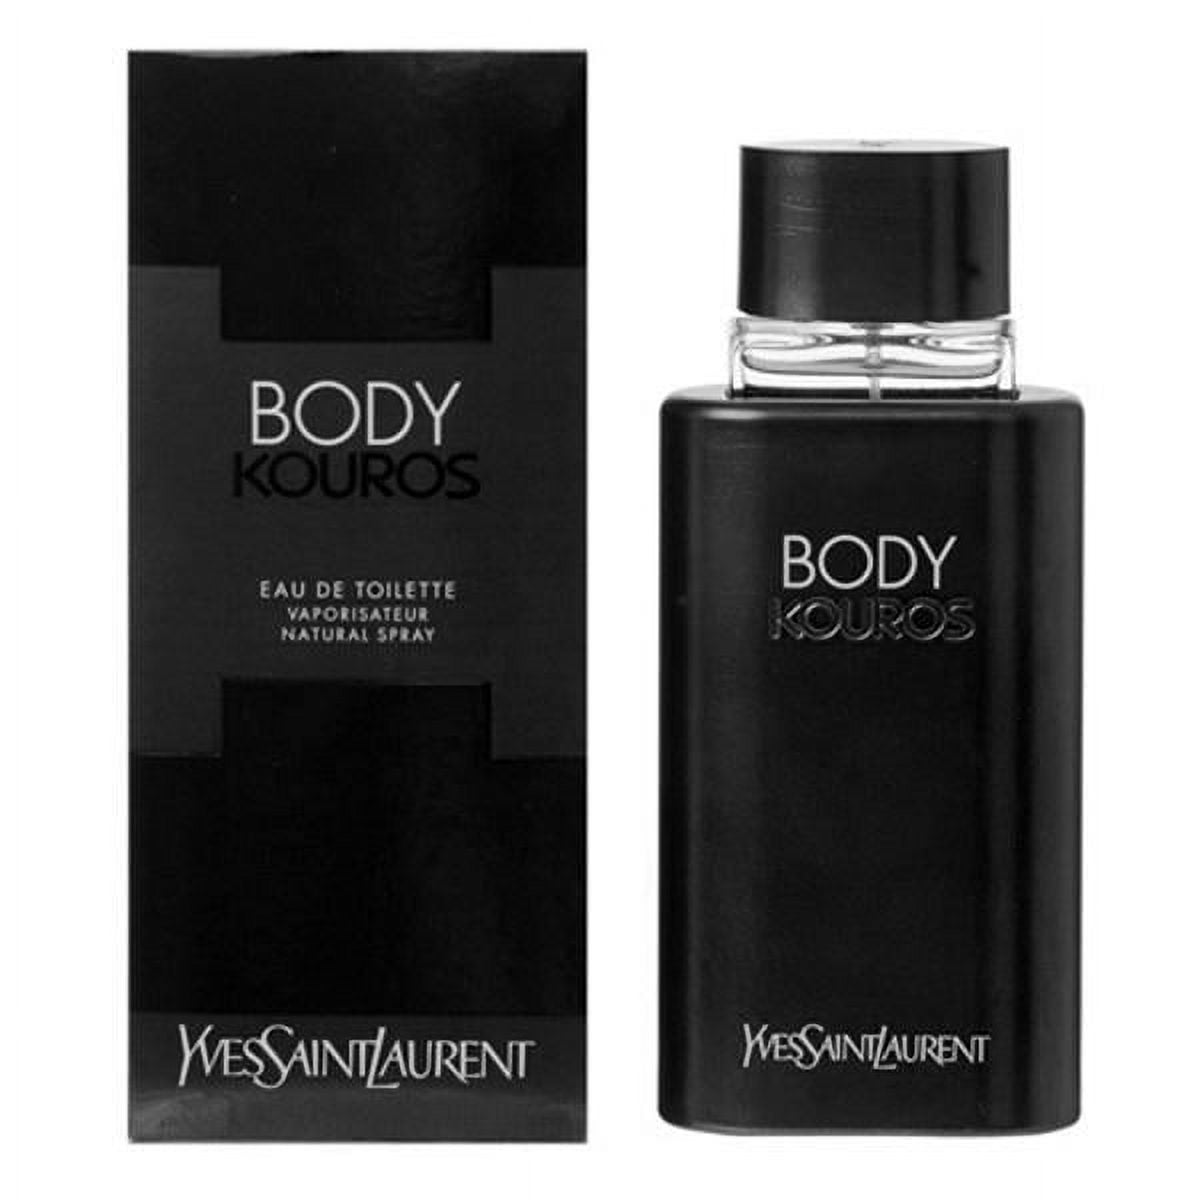 BODY KOUROS by Yves Saint Laurent 1.6 oz EDT Men's Spray Cologne (50 ml)  NEW NIB